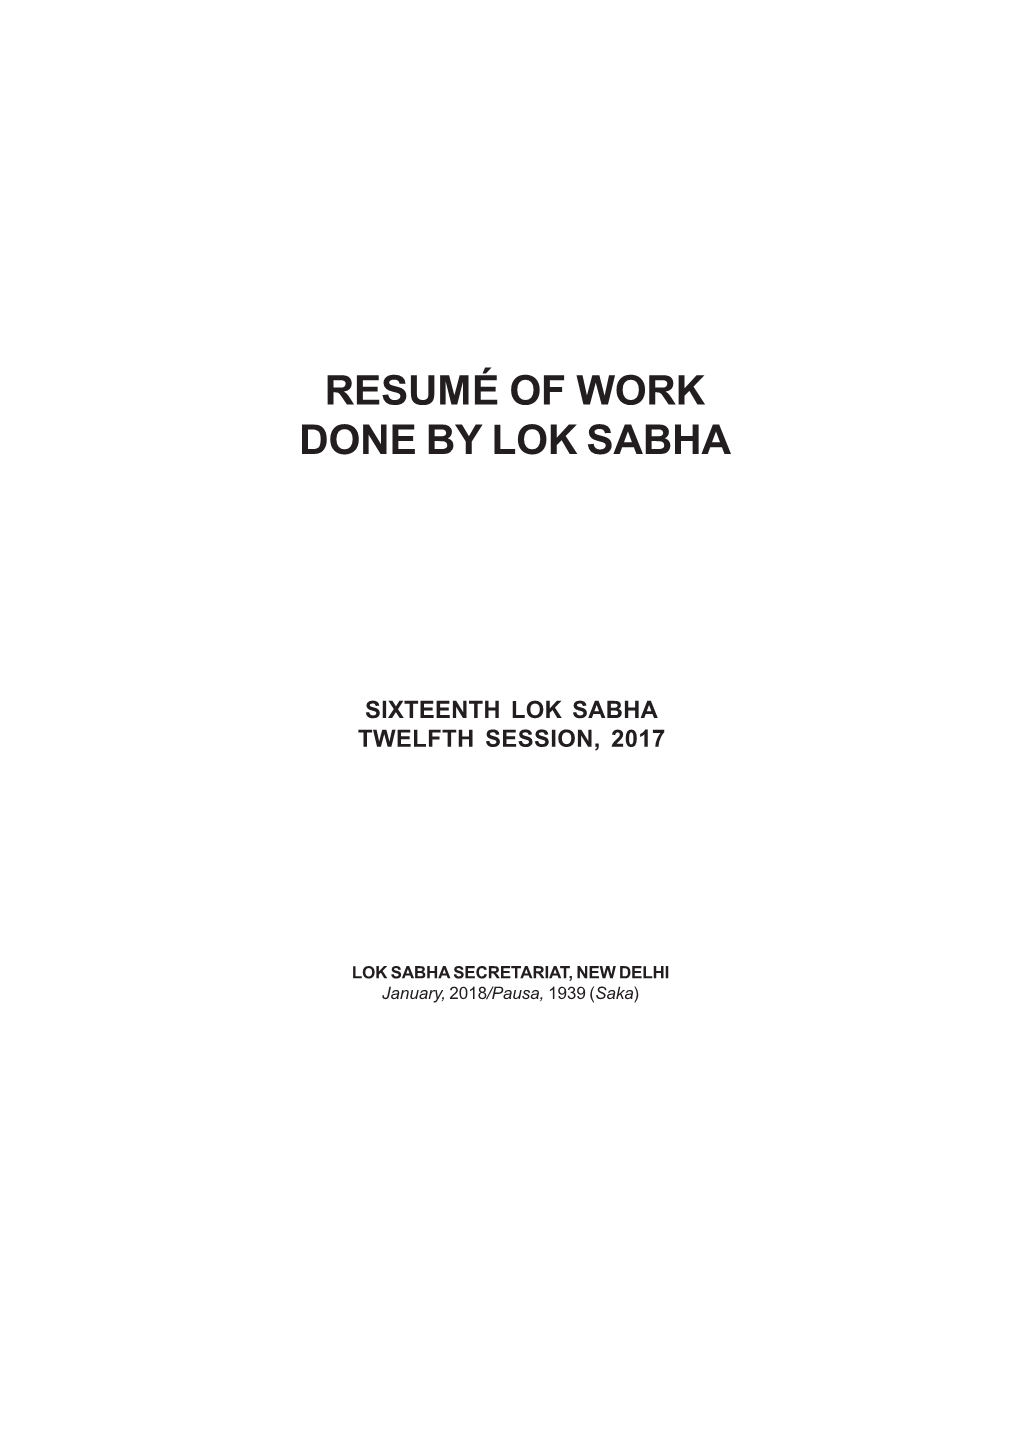 Resumé of Work Done by Lok Sabha